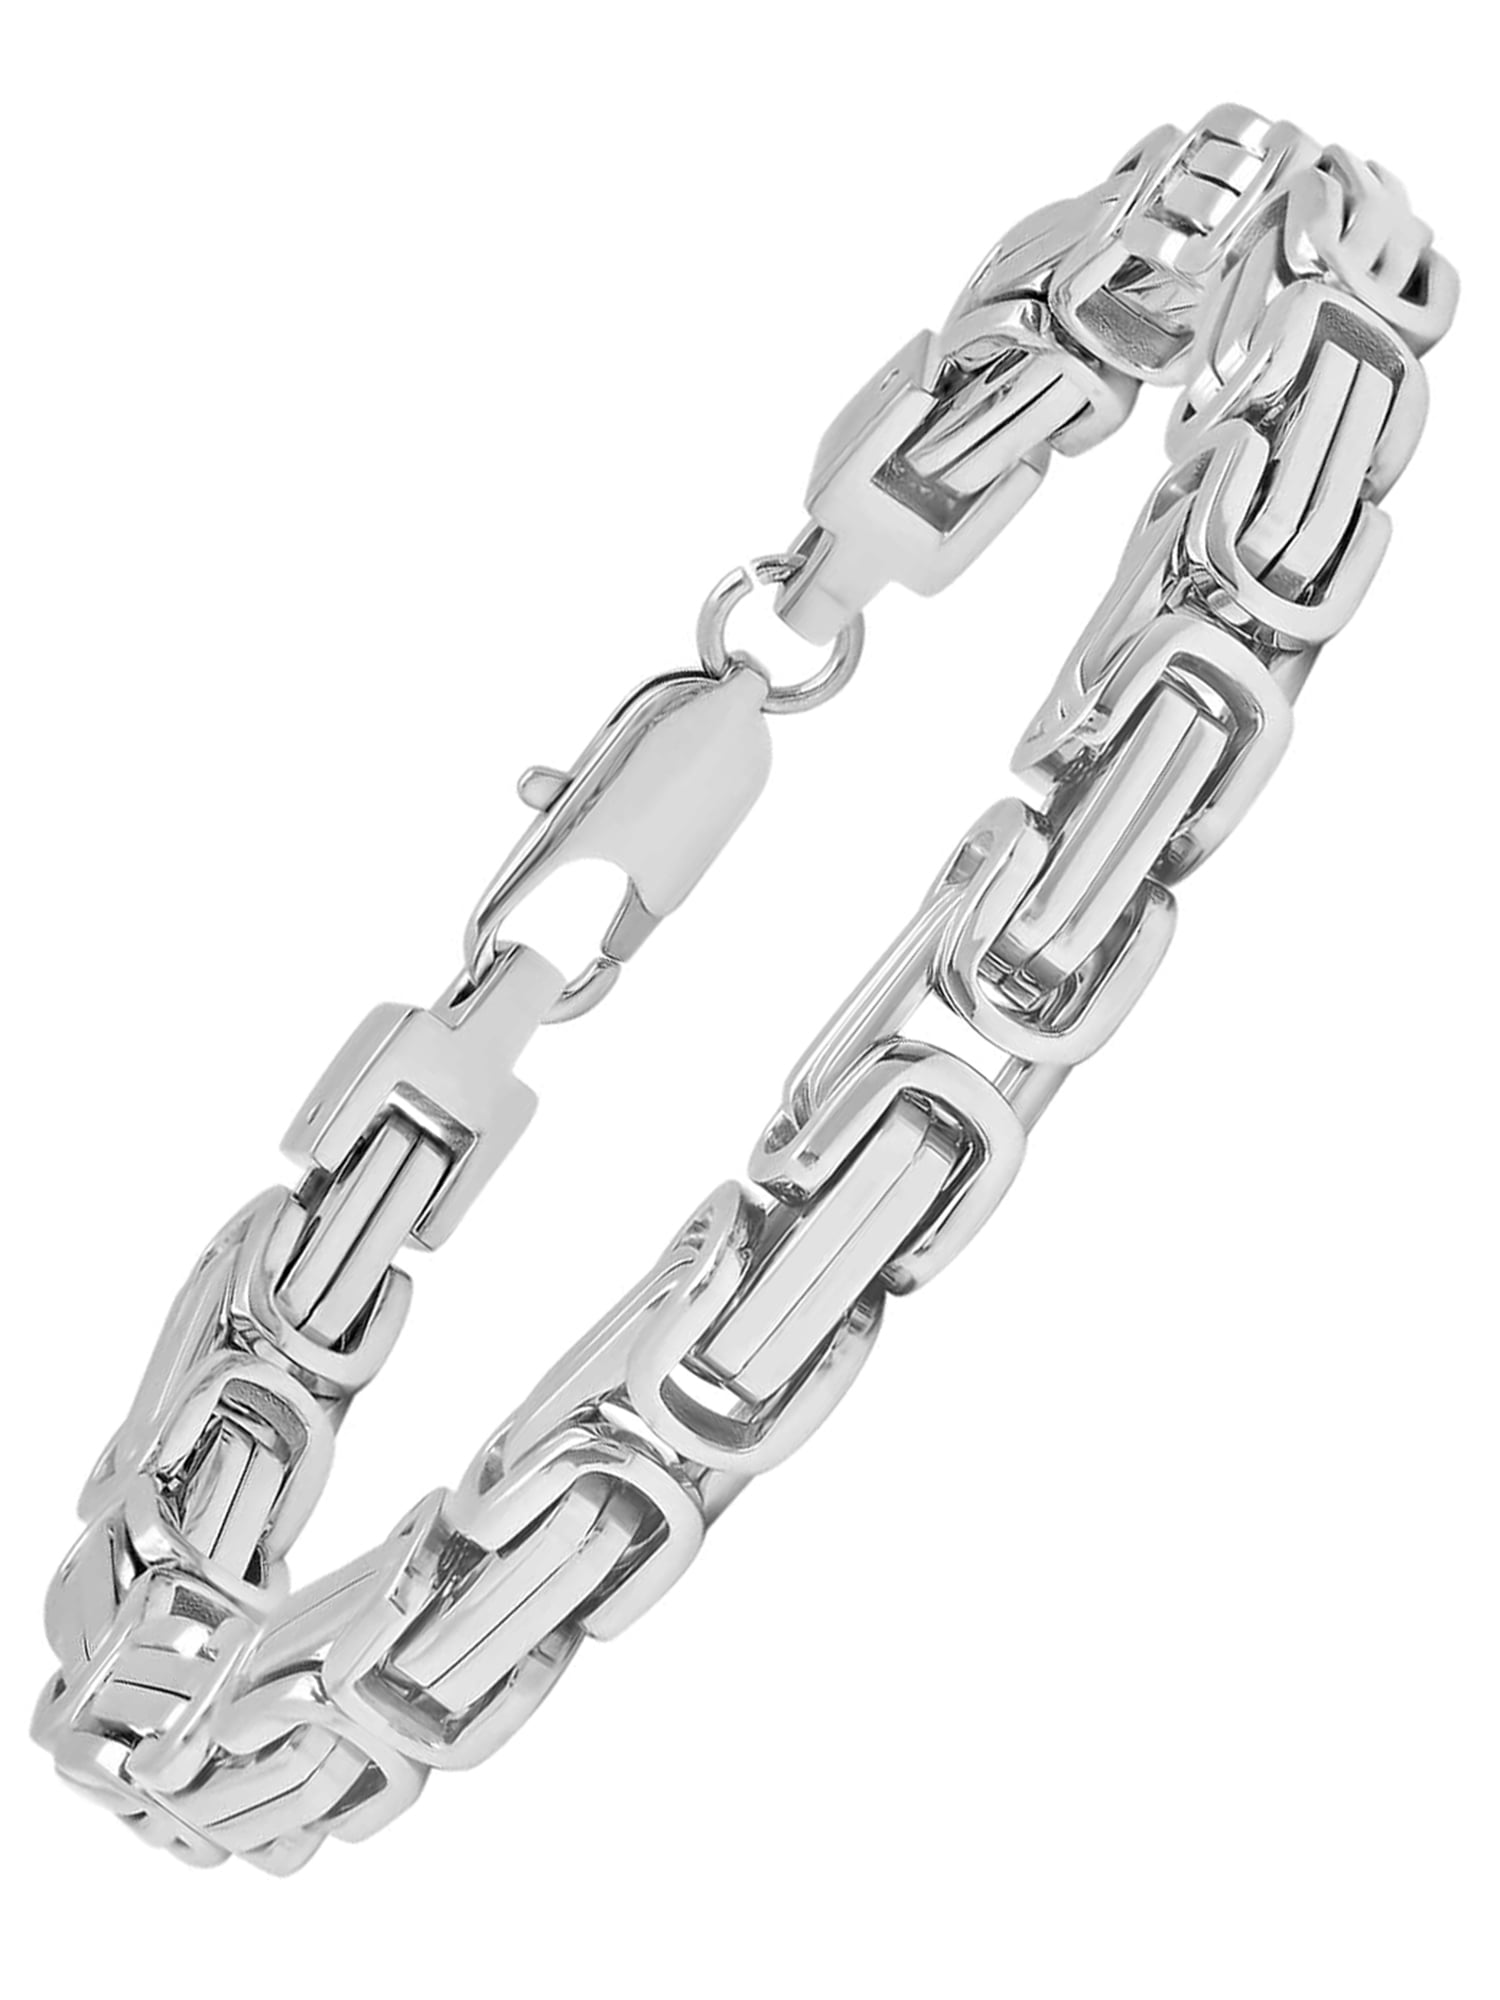 Davieslee Byzantine Chain Bracelet for Men Gold Black Silver Color  Stainless Steel Mens Bracelets Jewelry 6811mm LKBM31